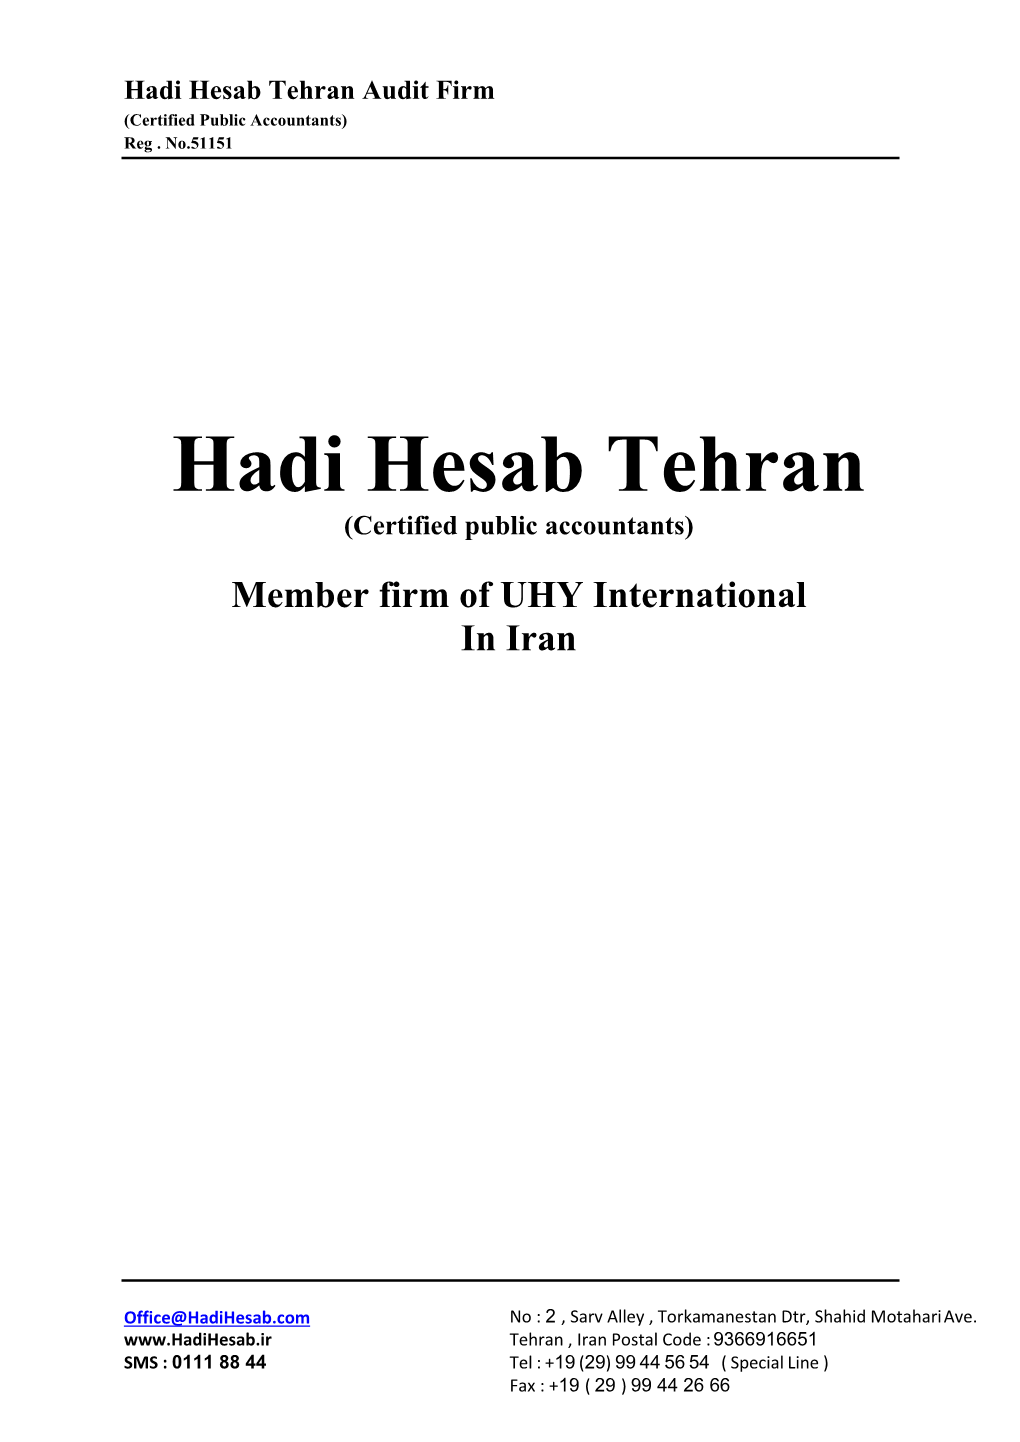 Hadi Hesab Tehran Audit Firm (Certified Public Accountants) Reg